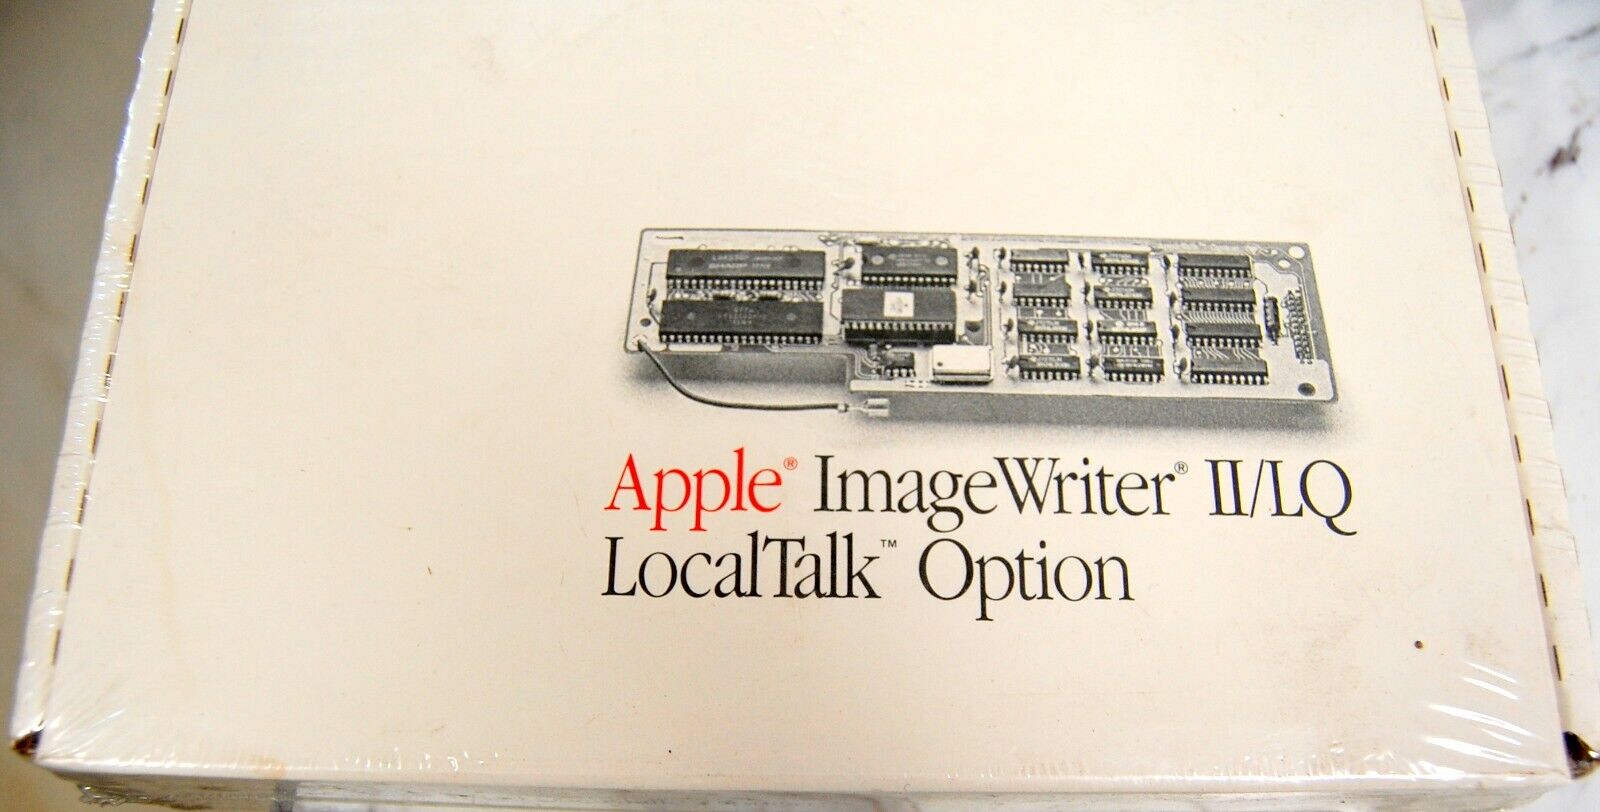 Apple IMAGEWRITER II/LQ LocalTalk Option New in Box  - ships worldwide